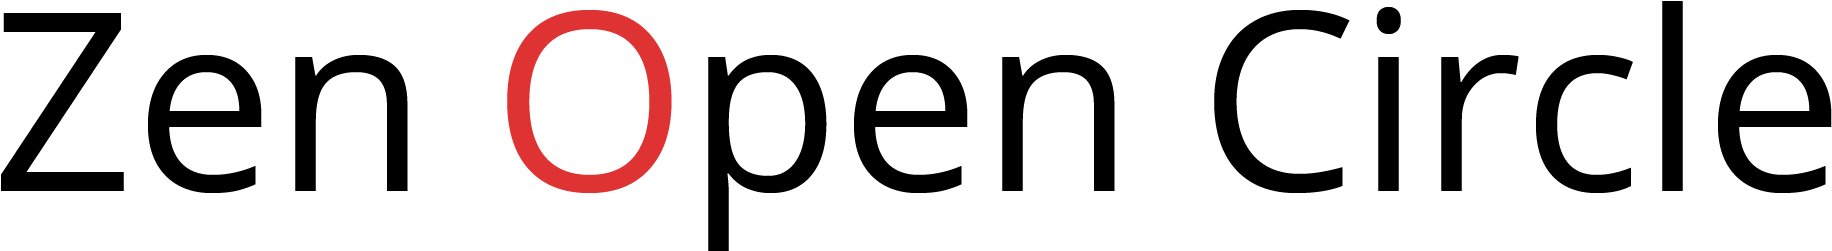 Microsoft Office Specialist Logo Vector (1853x282)